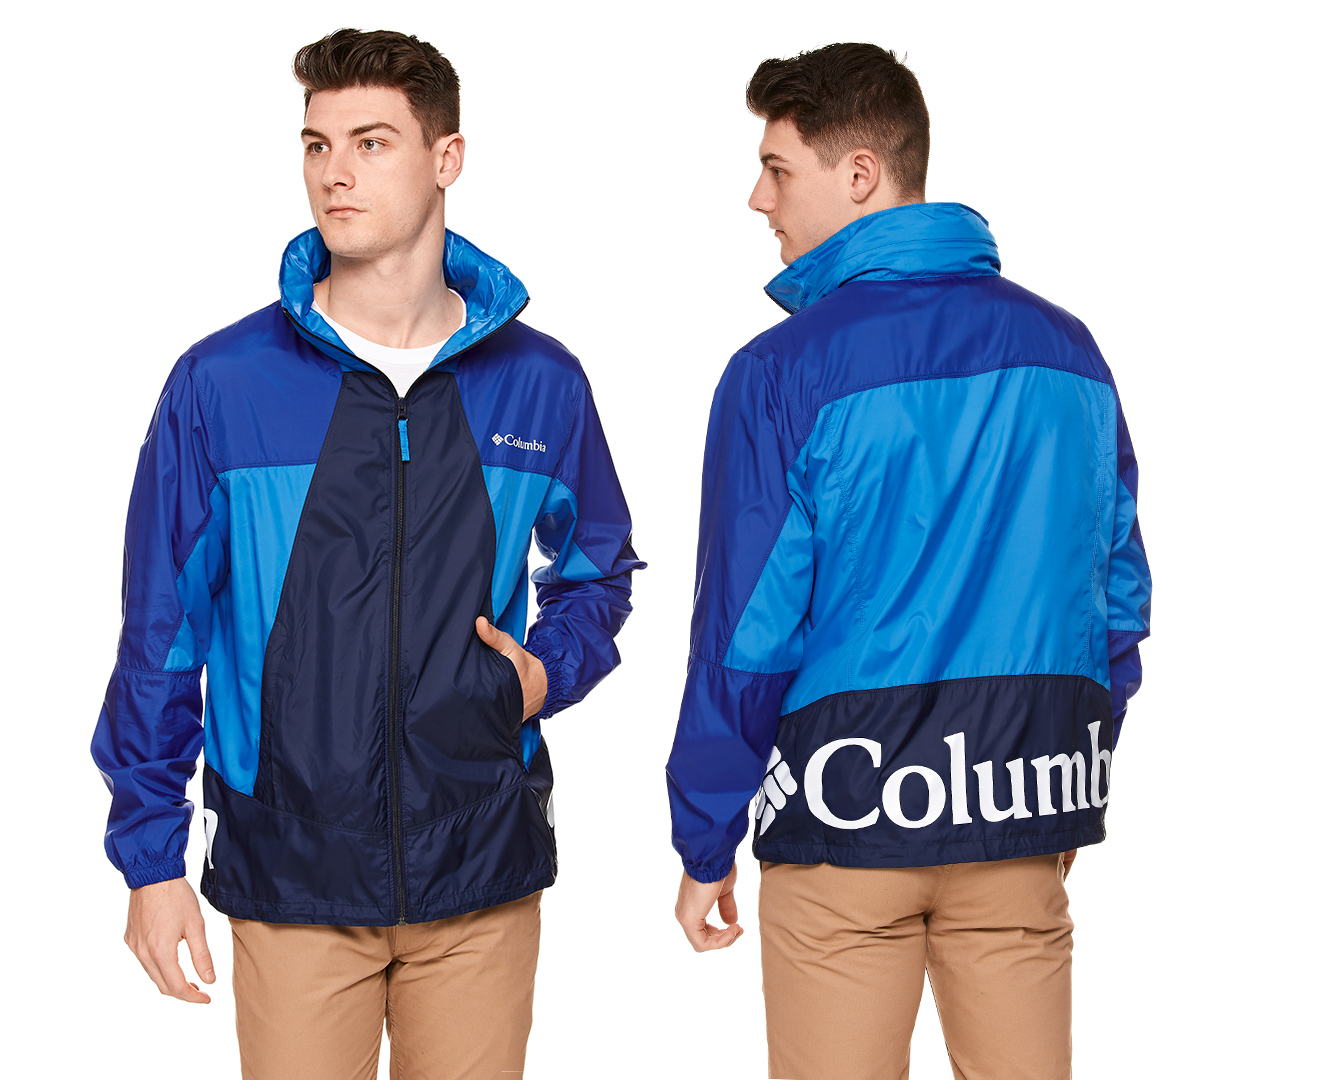 Shop Columbia Clothing | Columbia Sportswear on SALE | Catch.com.au